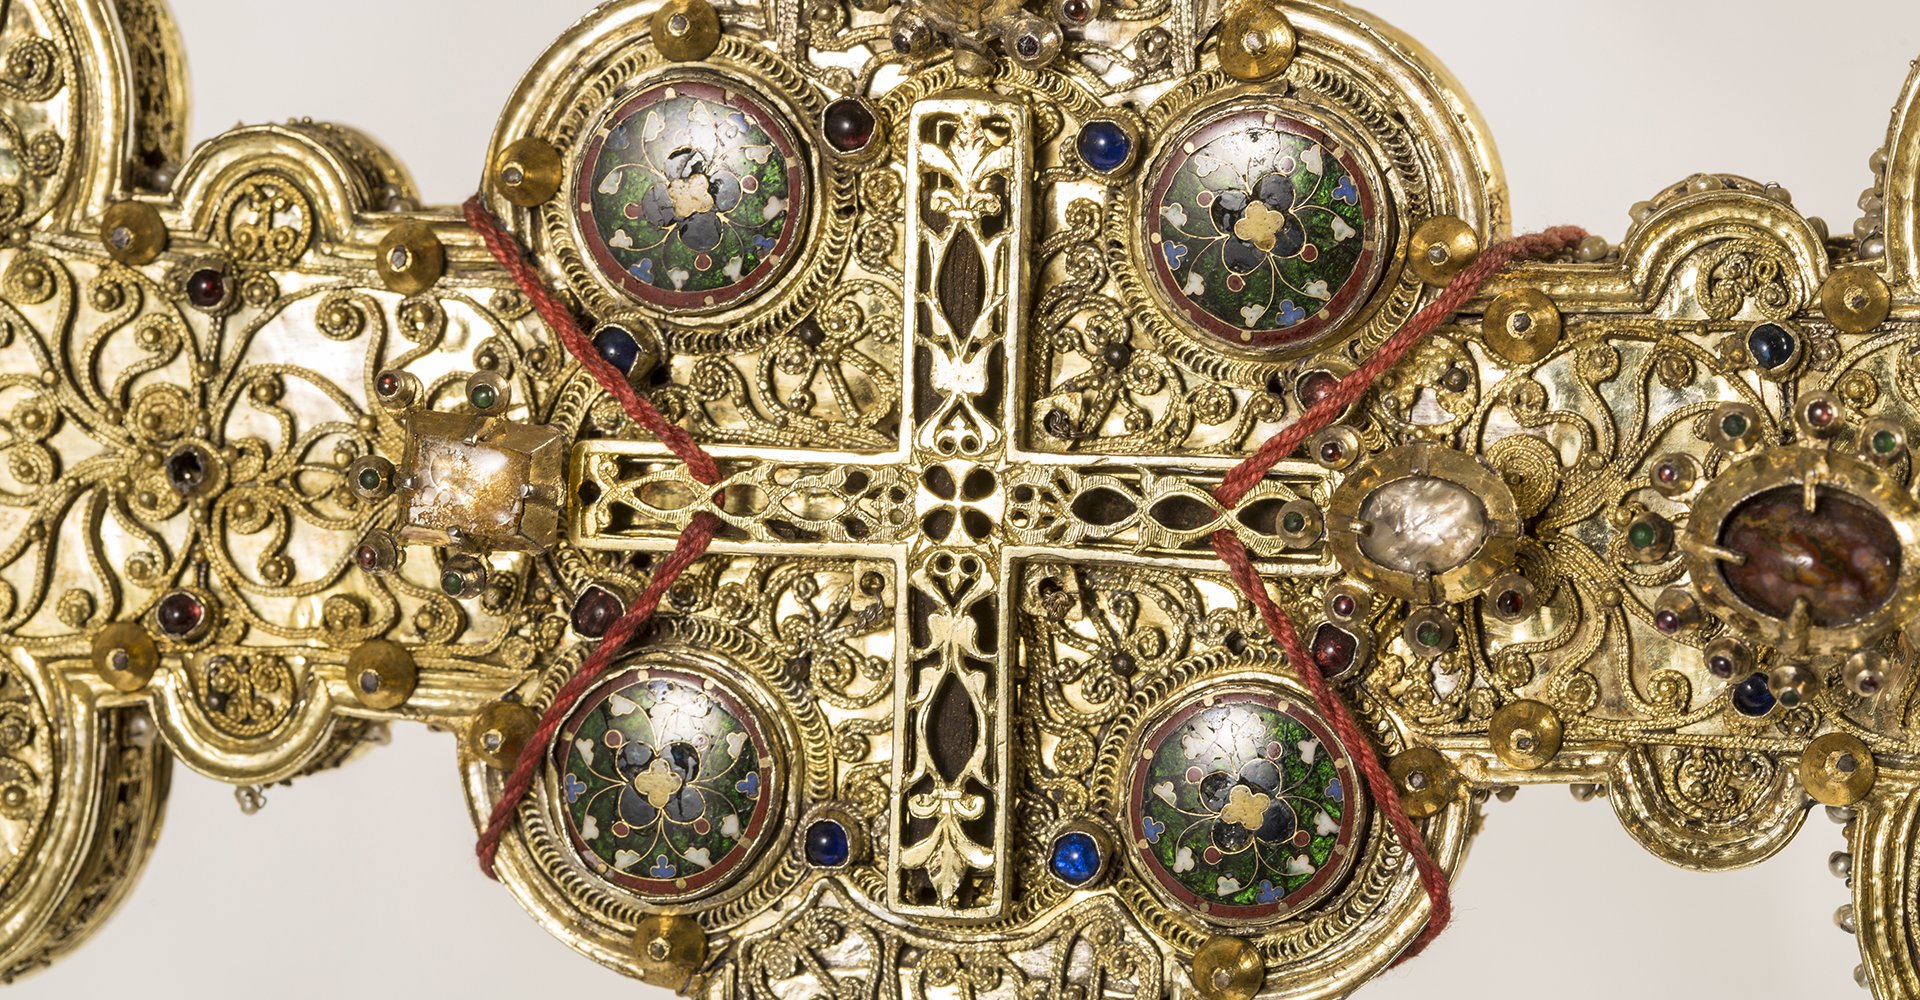 Holy Cross - detail